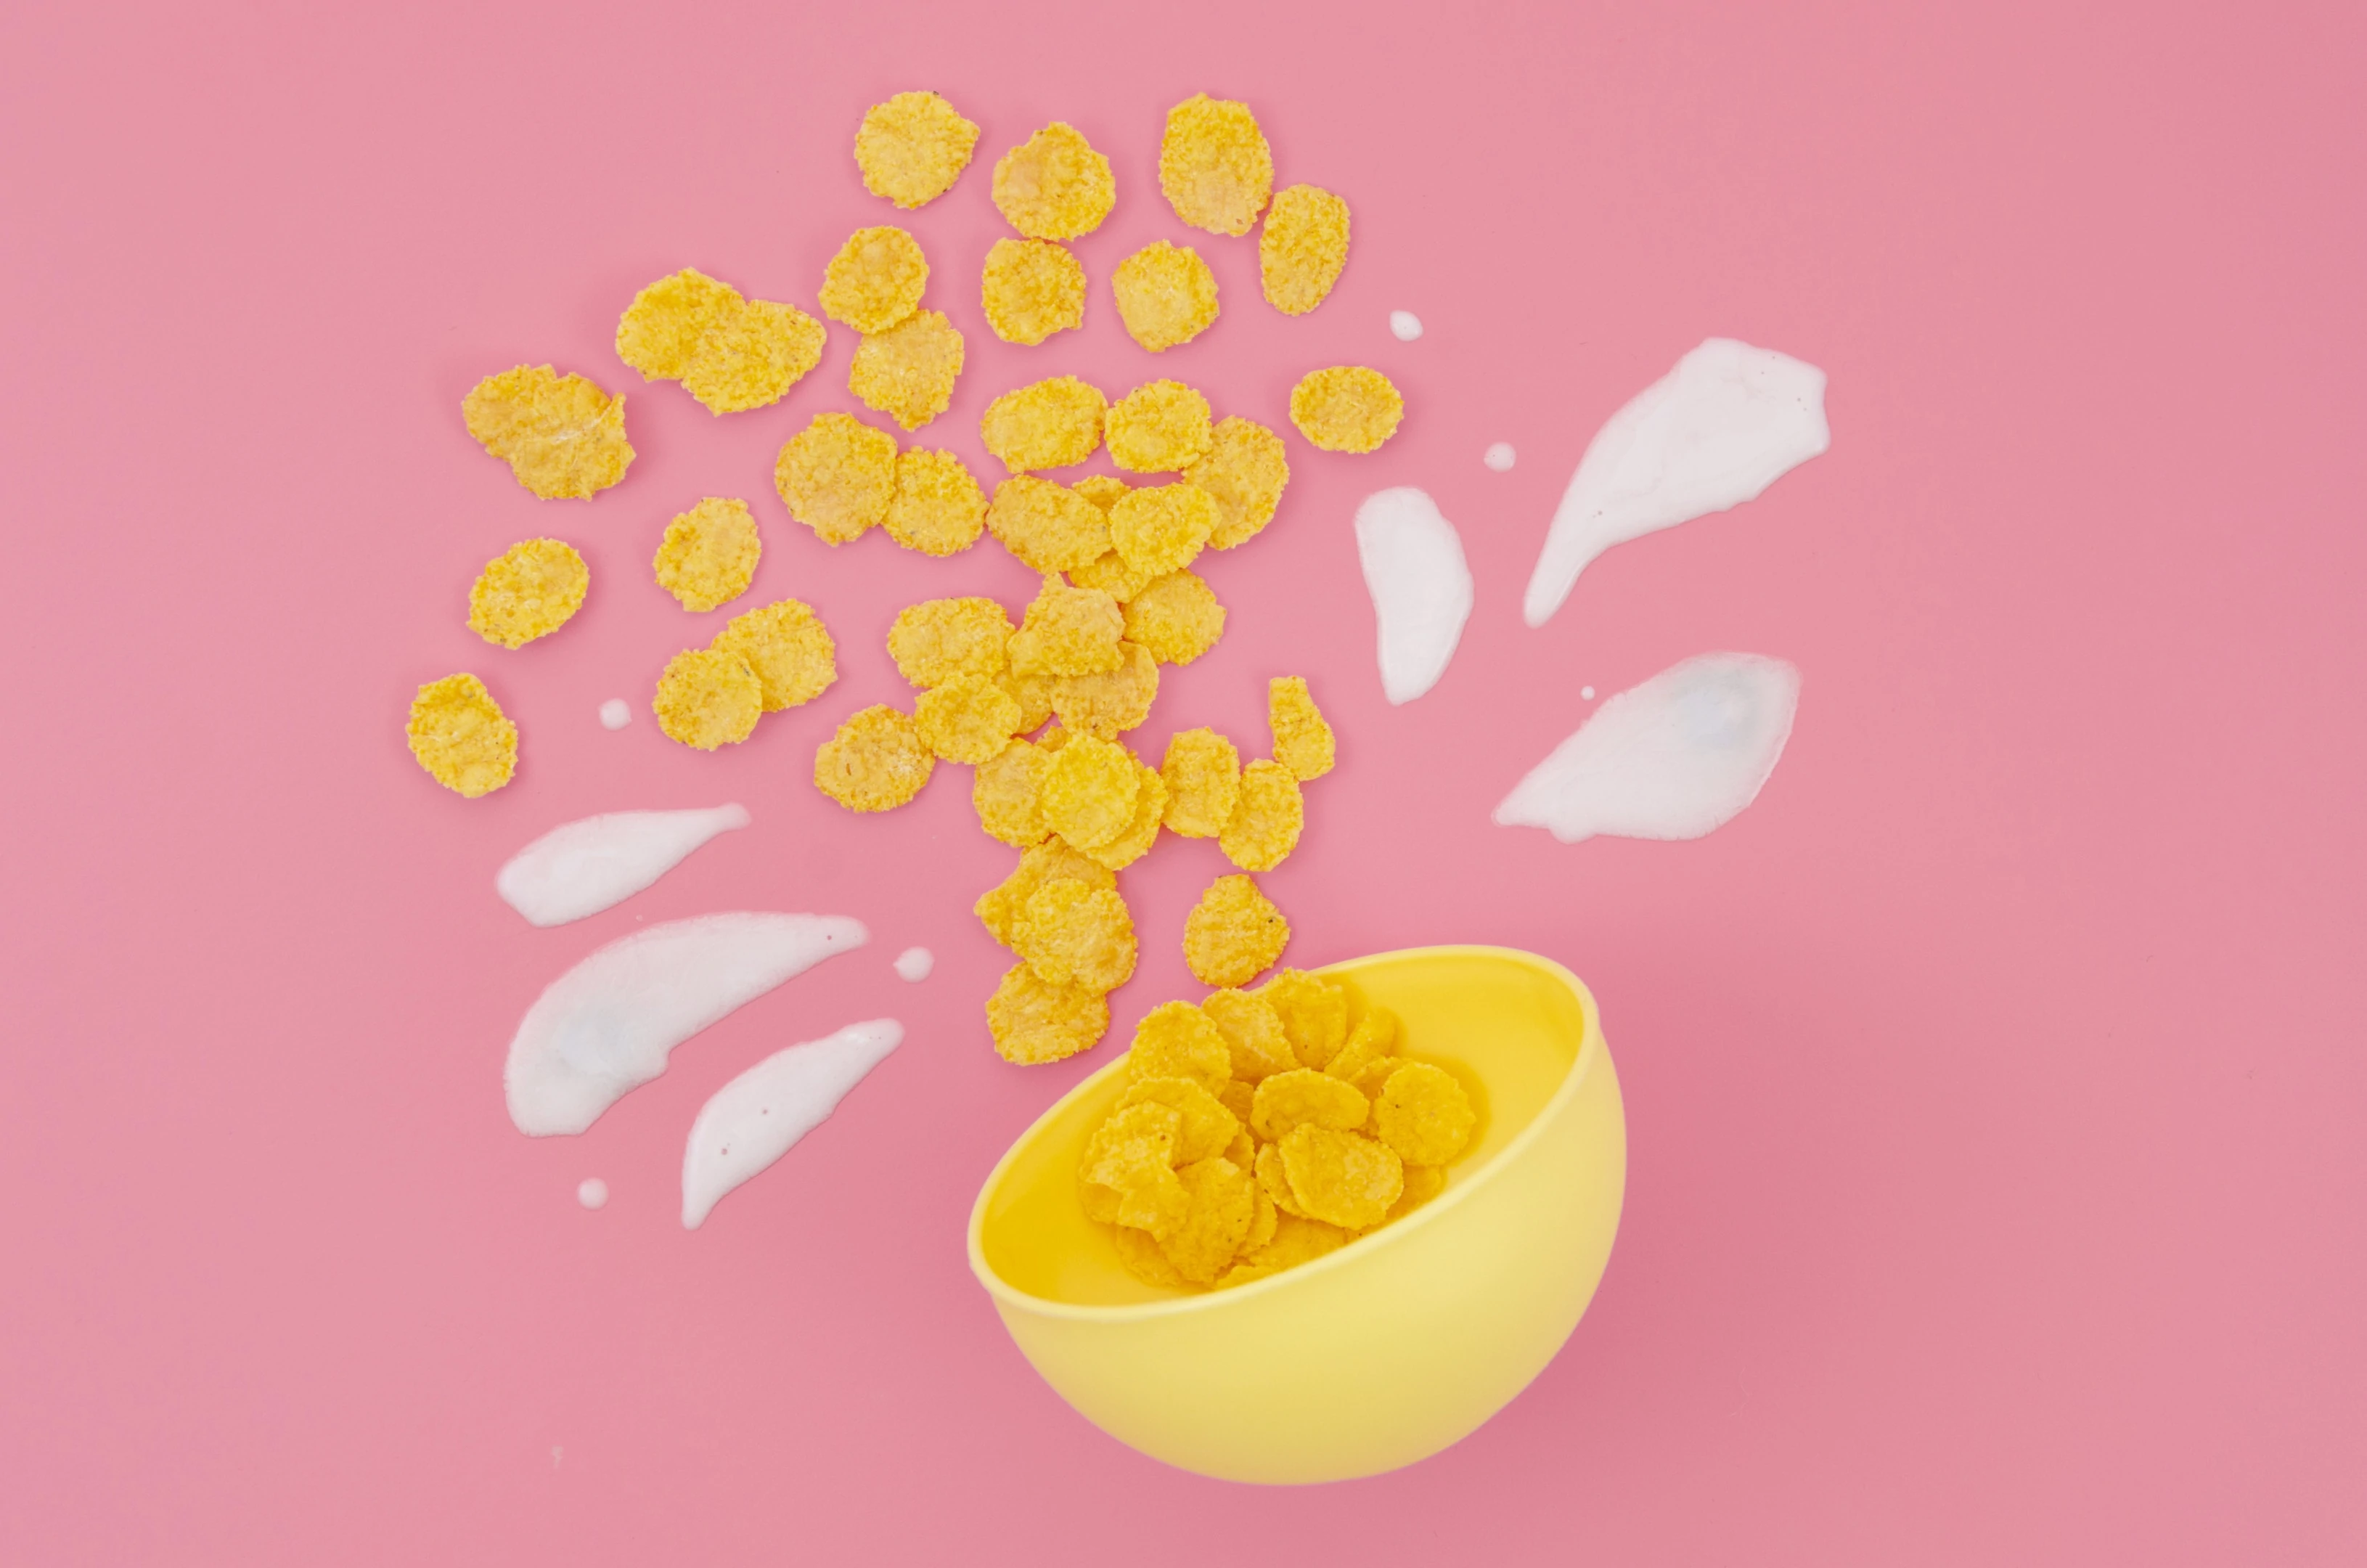 Cereal and milk arrangement on pink background